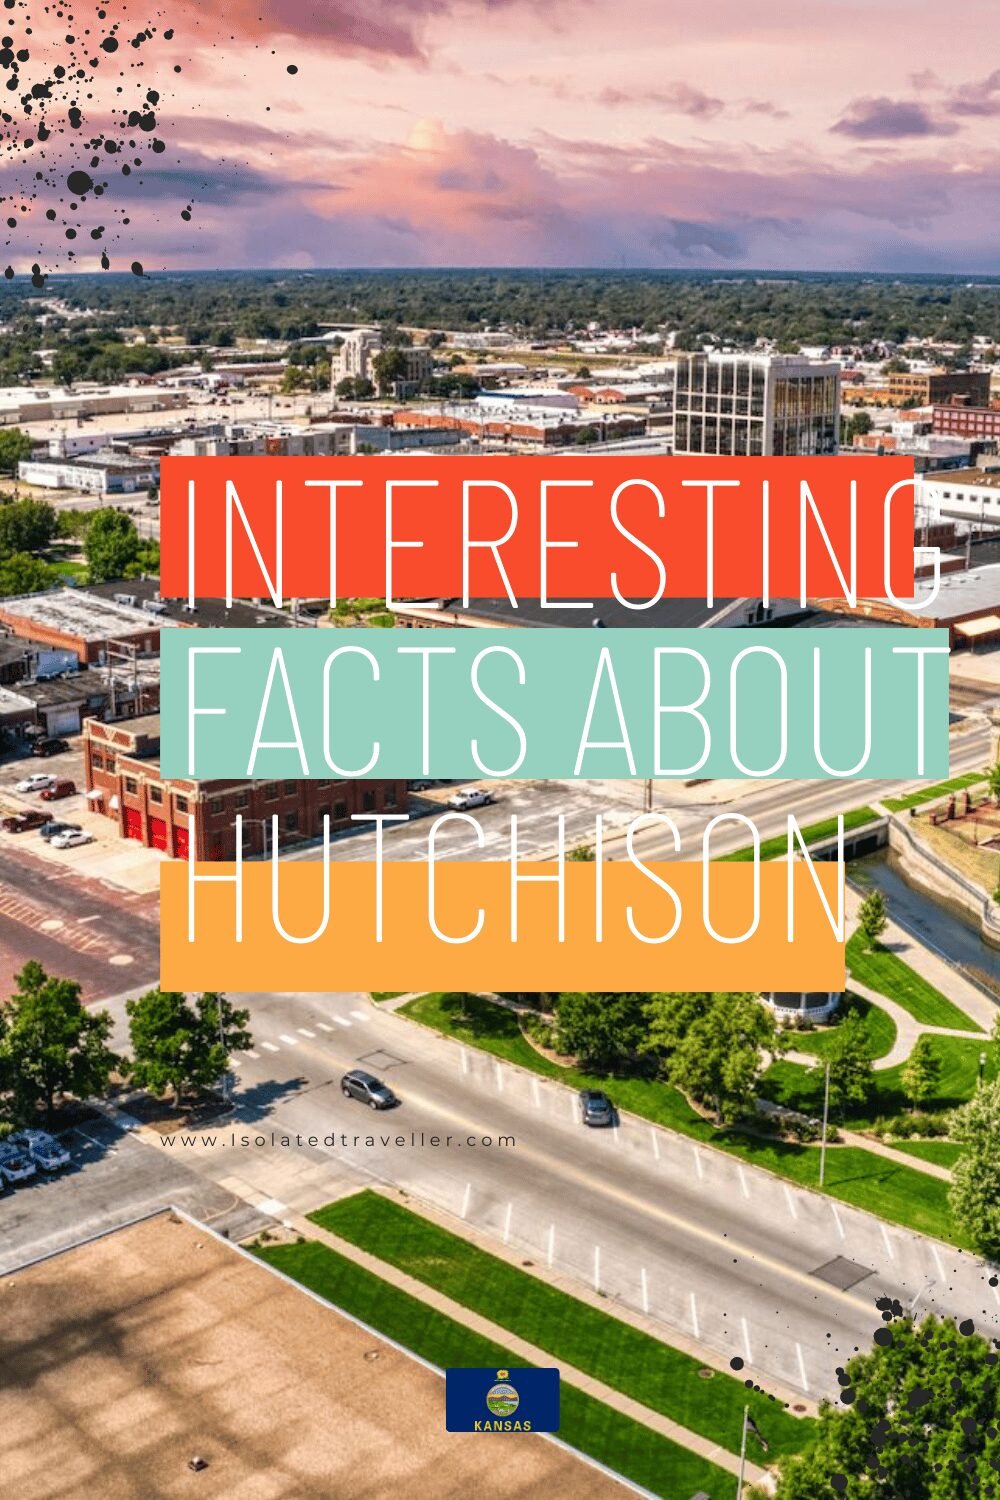 Facts About Hutchison, Kansas